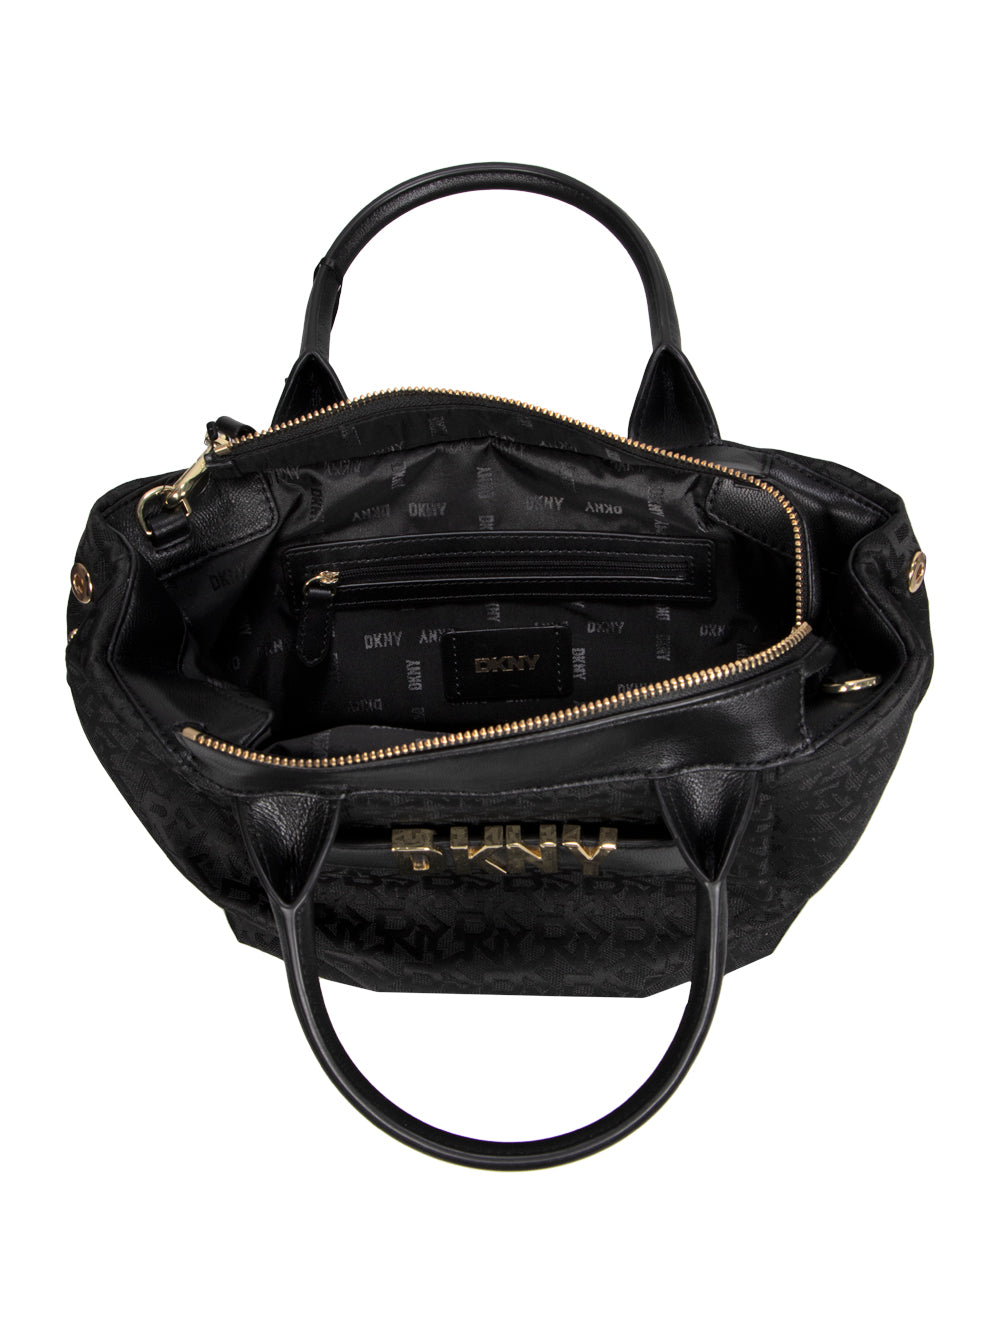 Pilar Top Handle Satchels Bags (Black/Black)